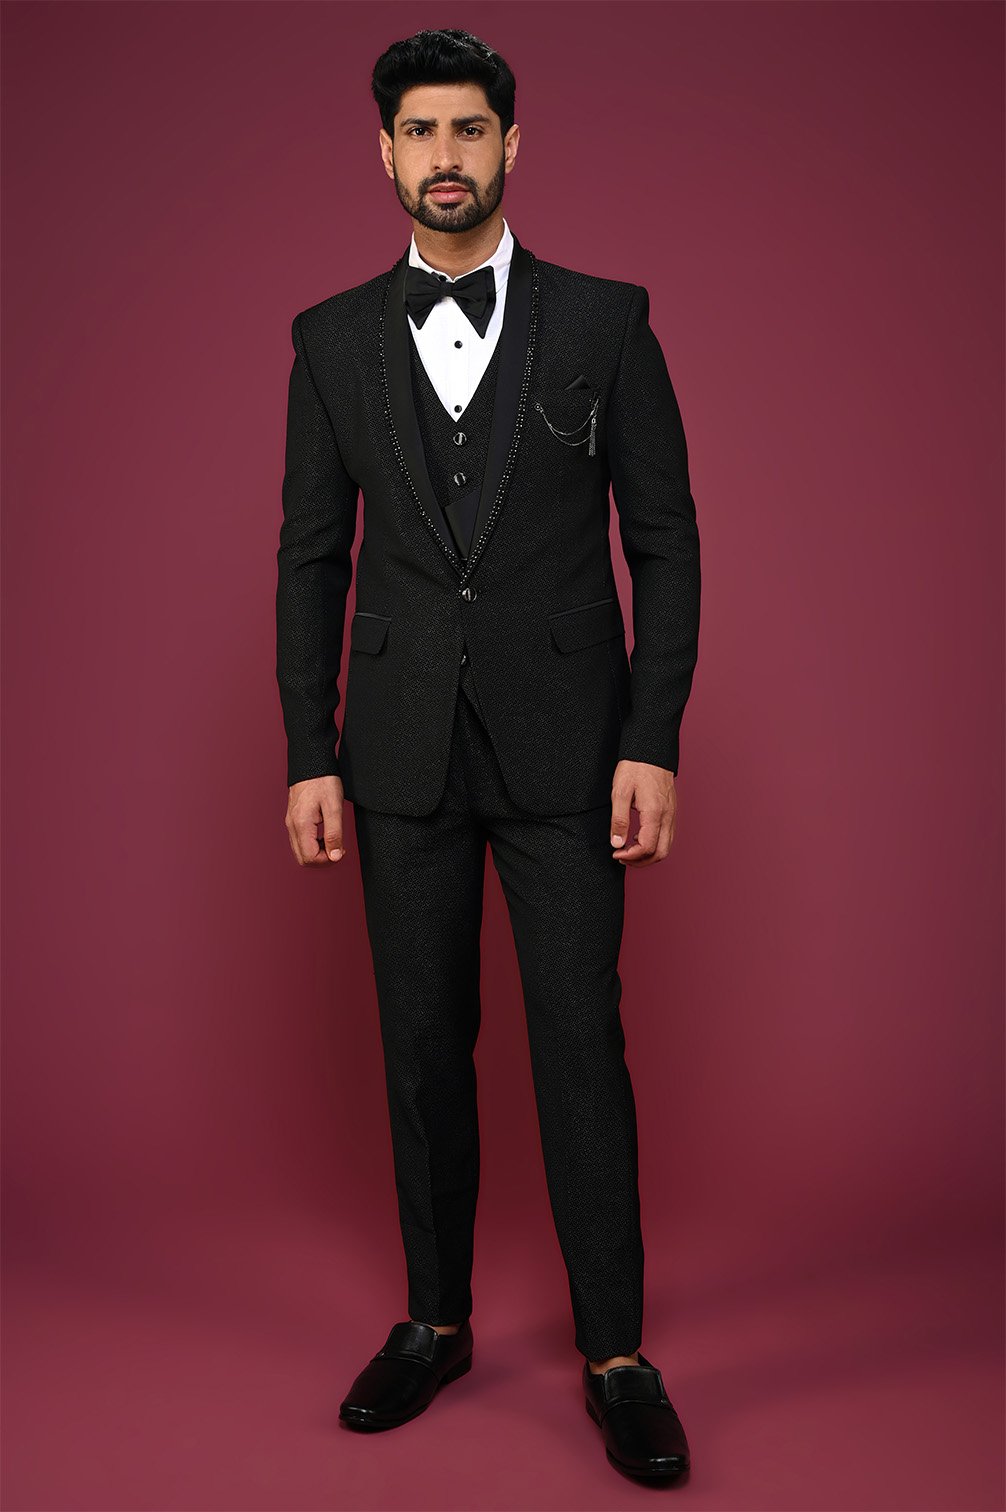 Wine Cutdana Work Wedding Tuxedo Suits for Men